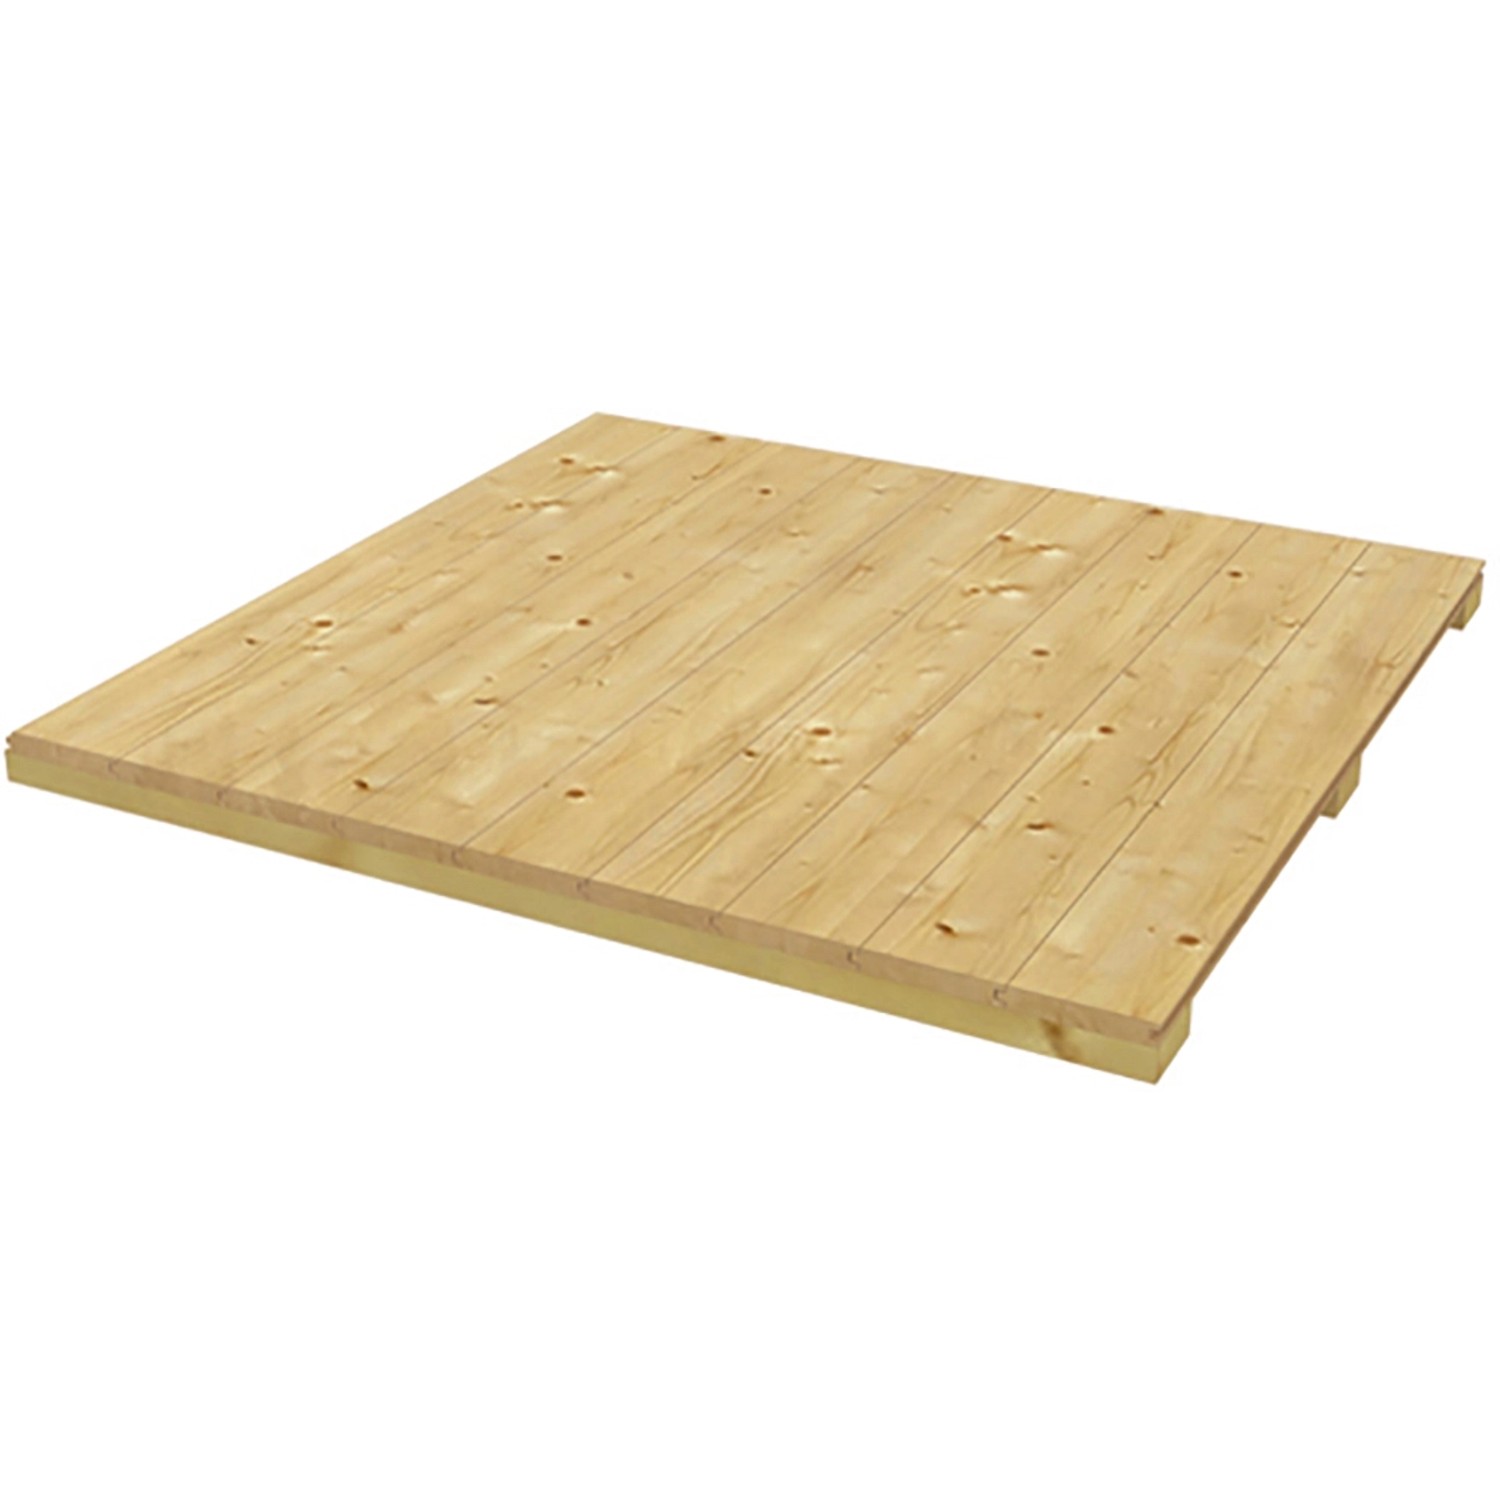 Skan Holz Fußboden für Gartenhaus/Gerätehaus CrossCube Gr. 4 337 cm x 253 cm von Skan Holz